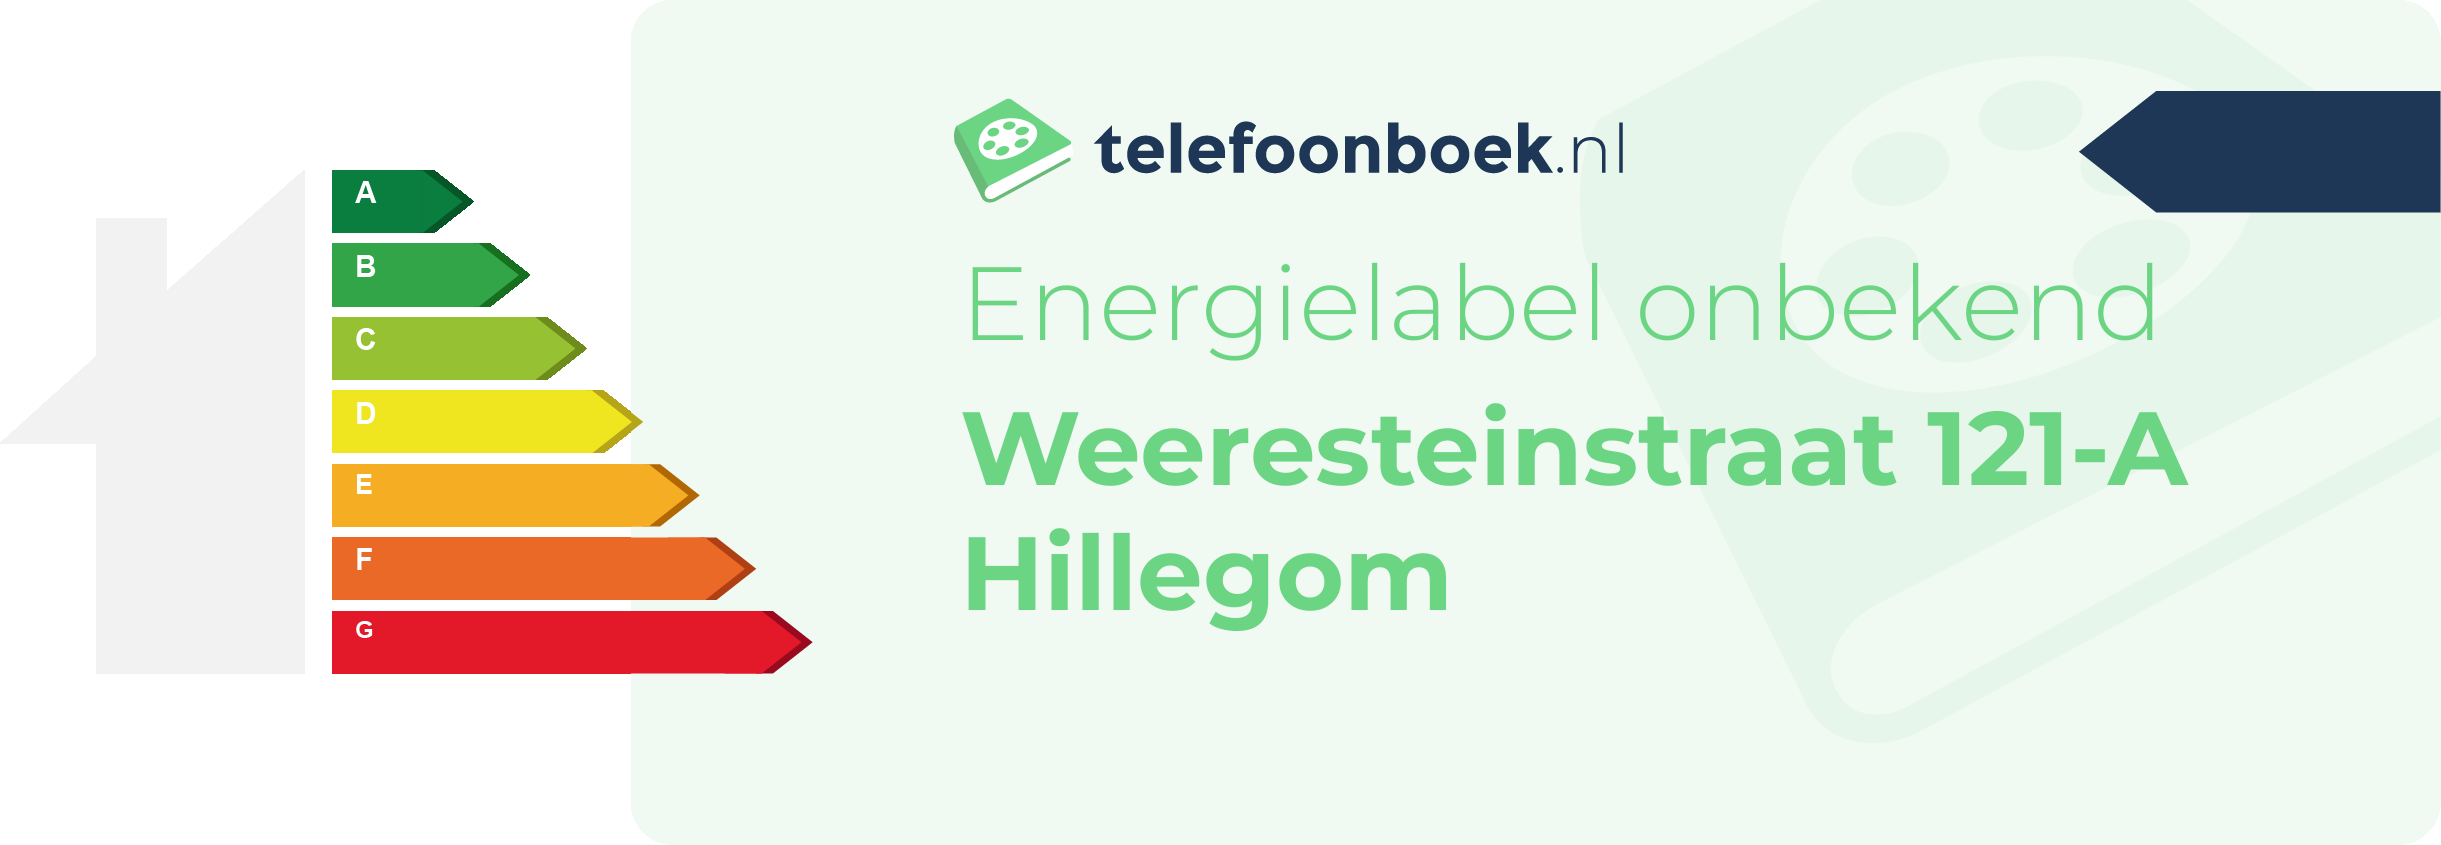 Energielabel Weeresteinstraat 121-A Hillegom